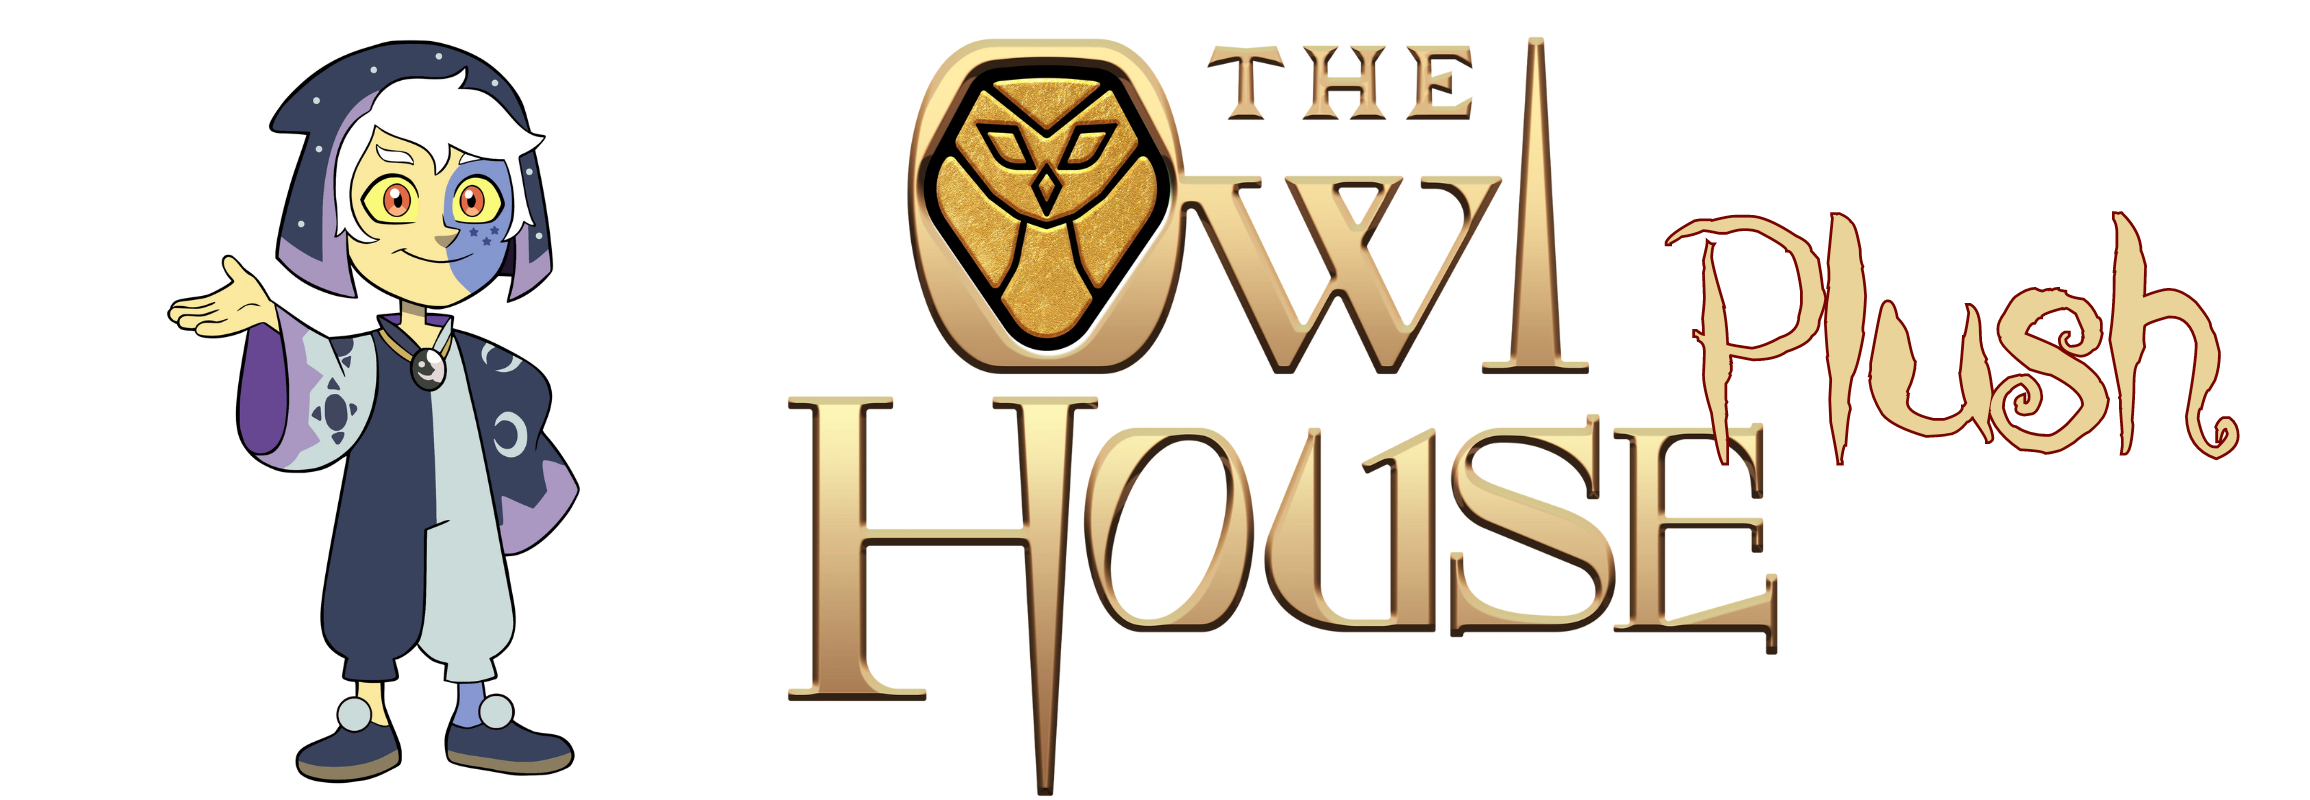 The Owl house plush logo - The Owl House Plush